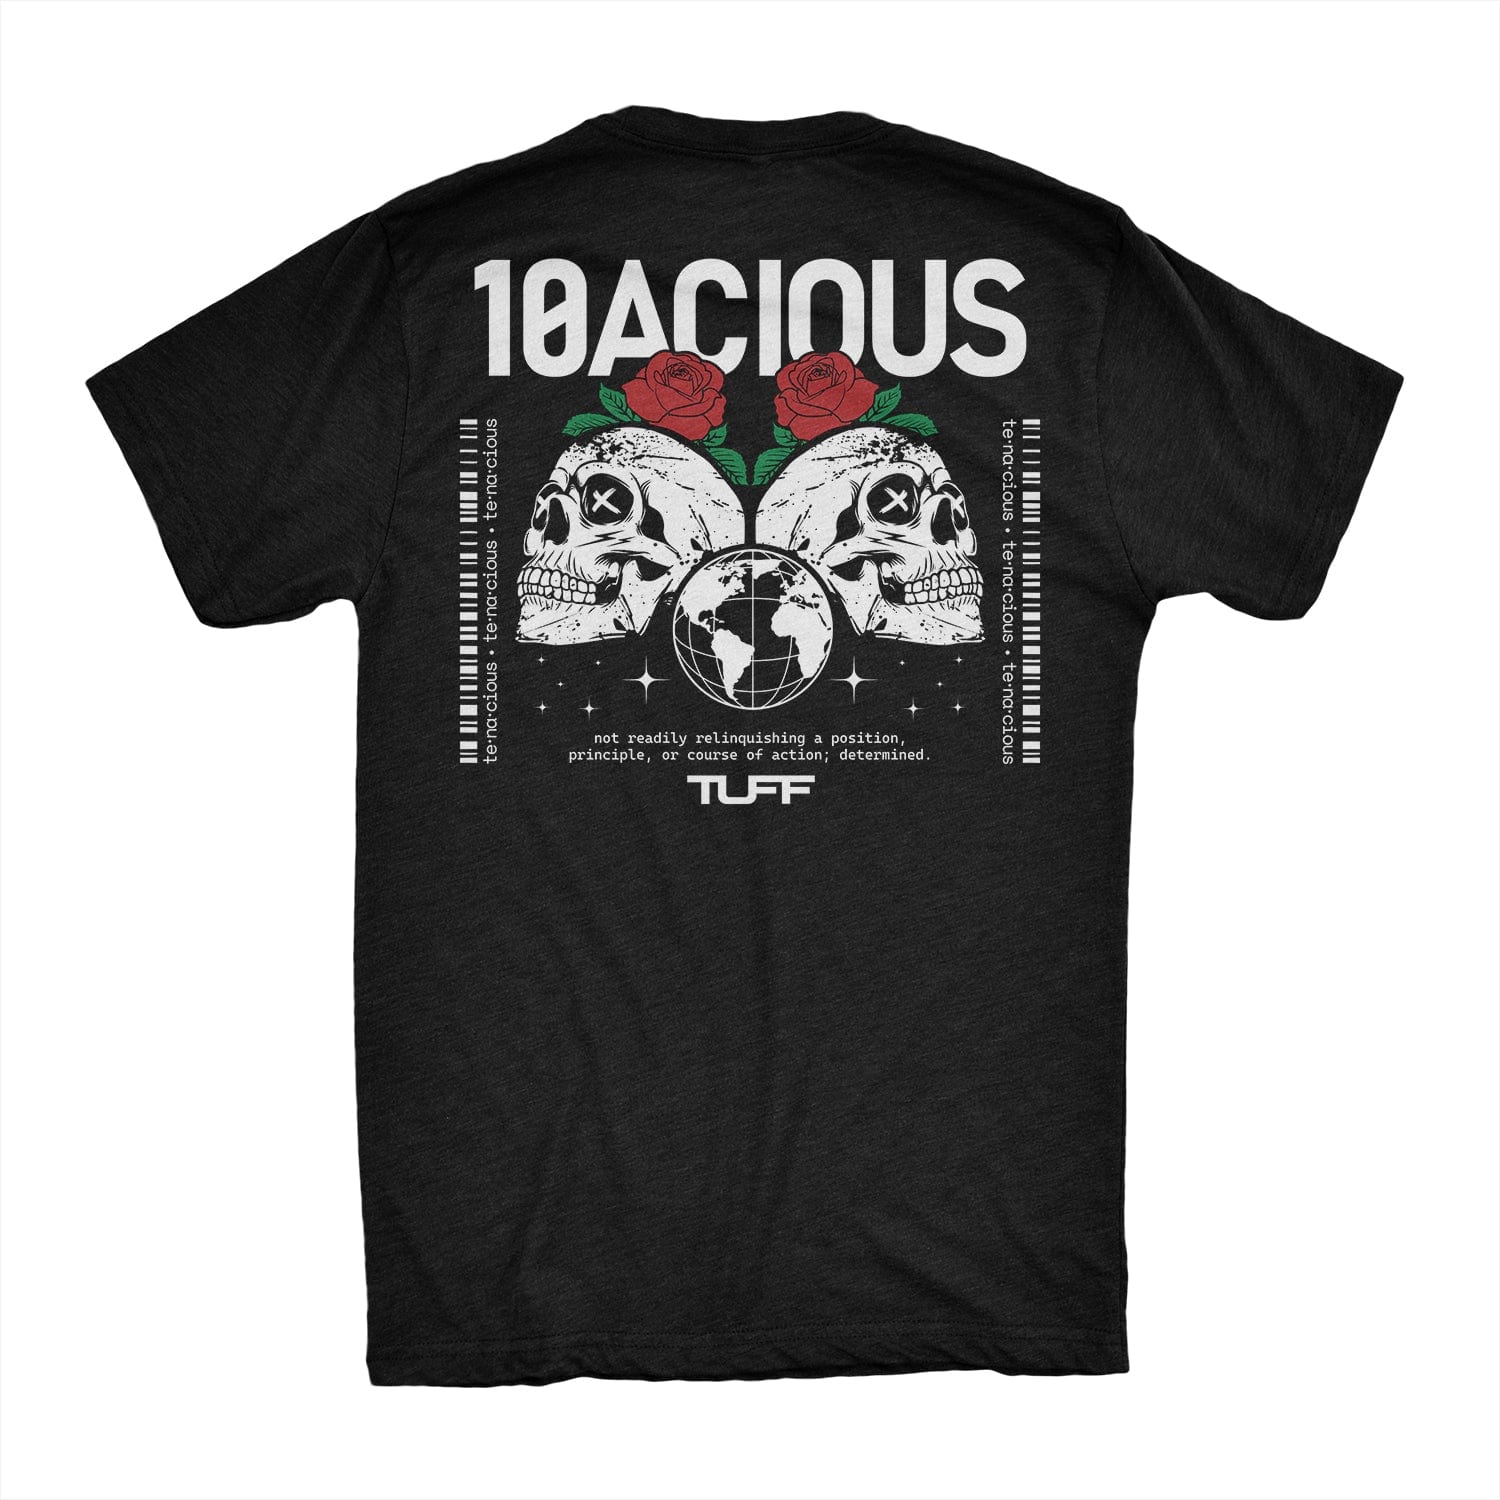 TUFF 10acious Skull Tee T-shirt